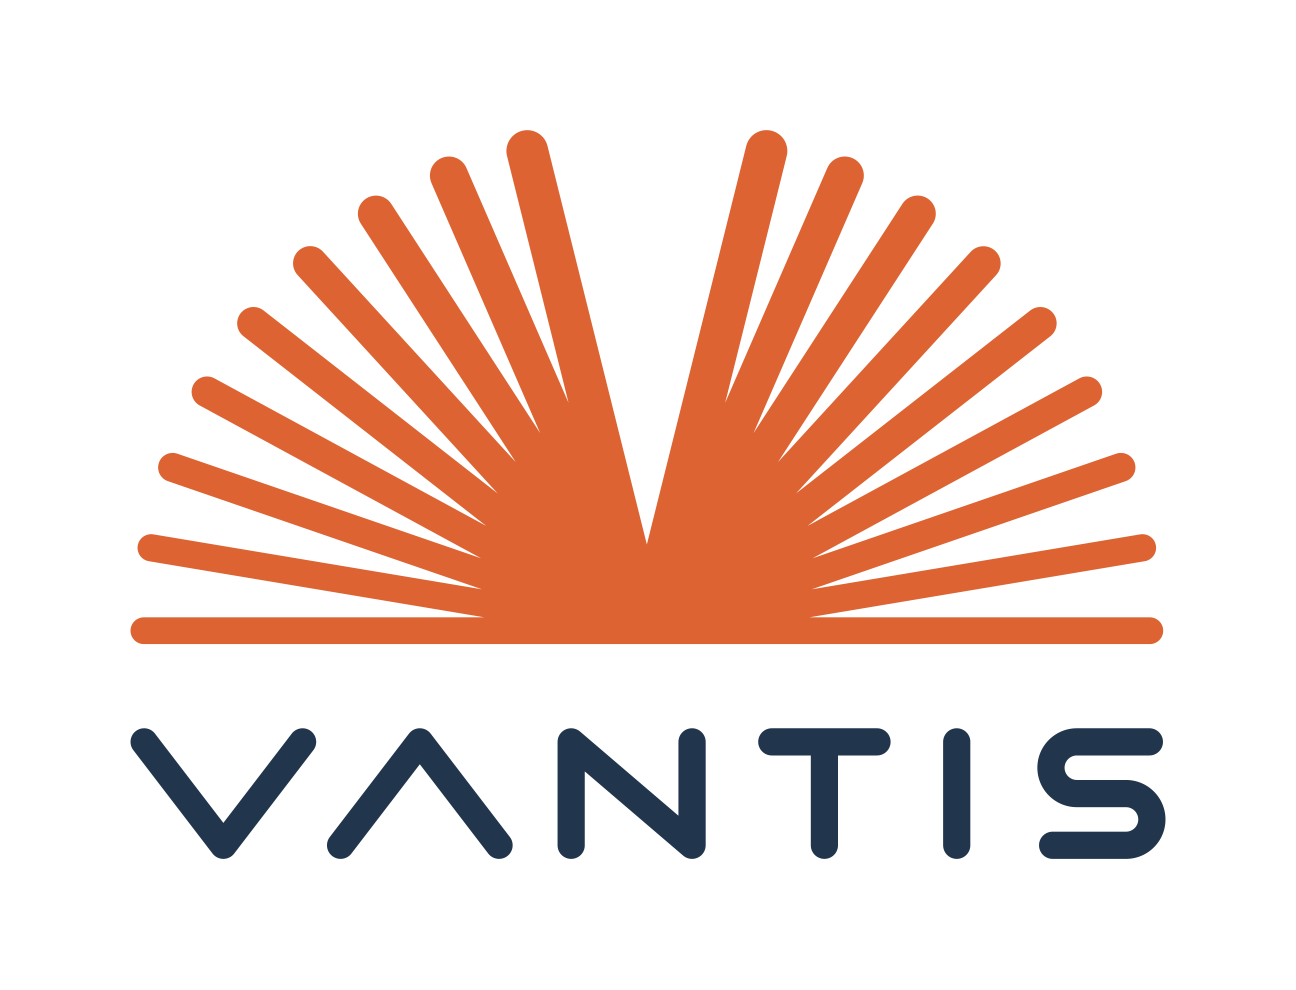 Vantis